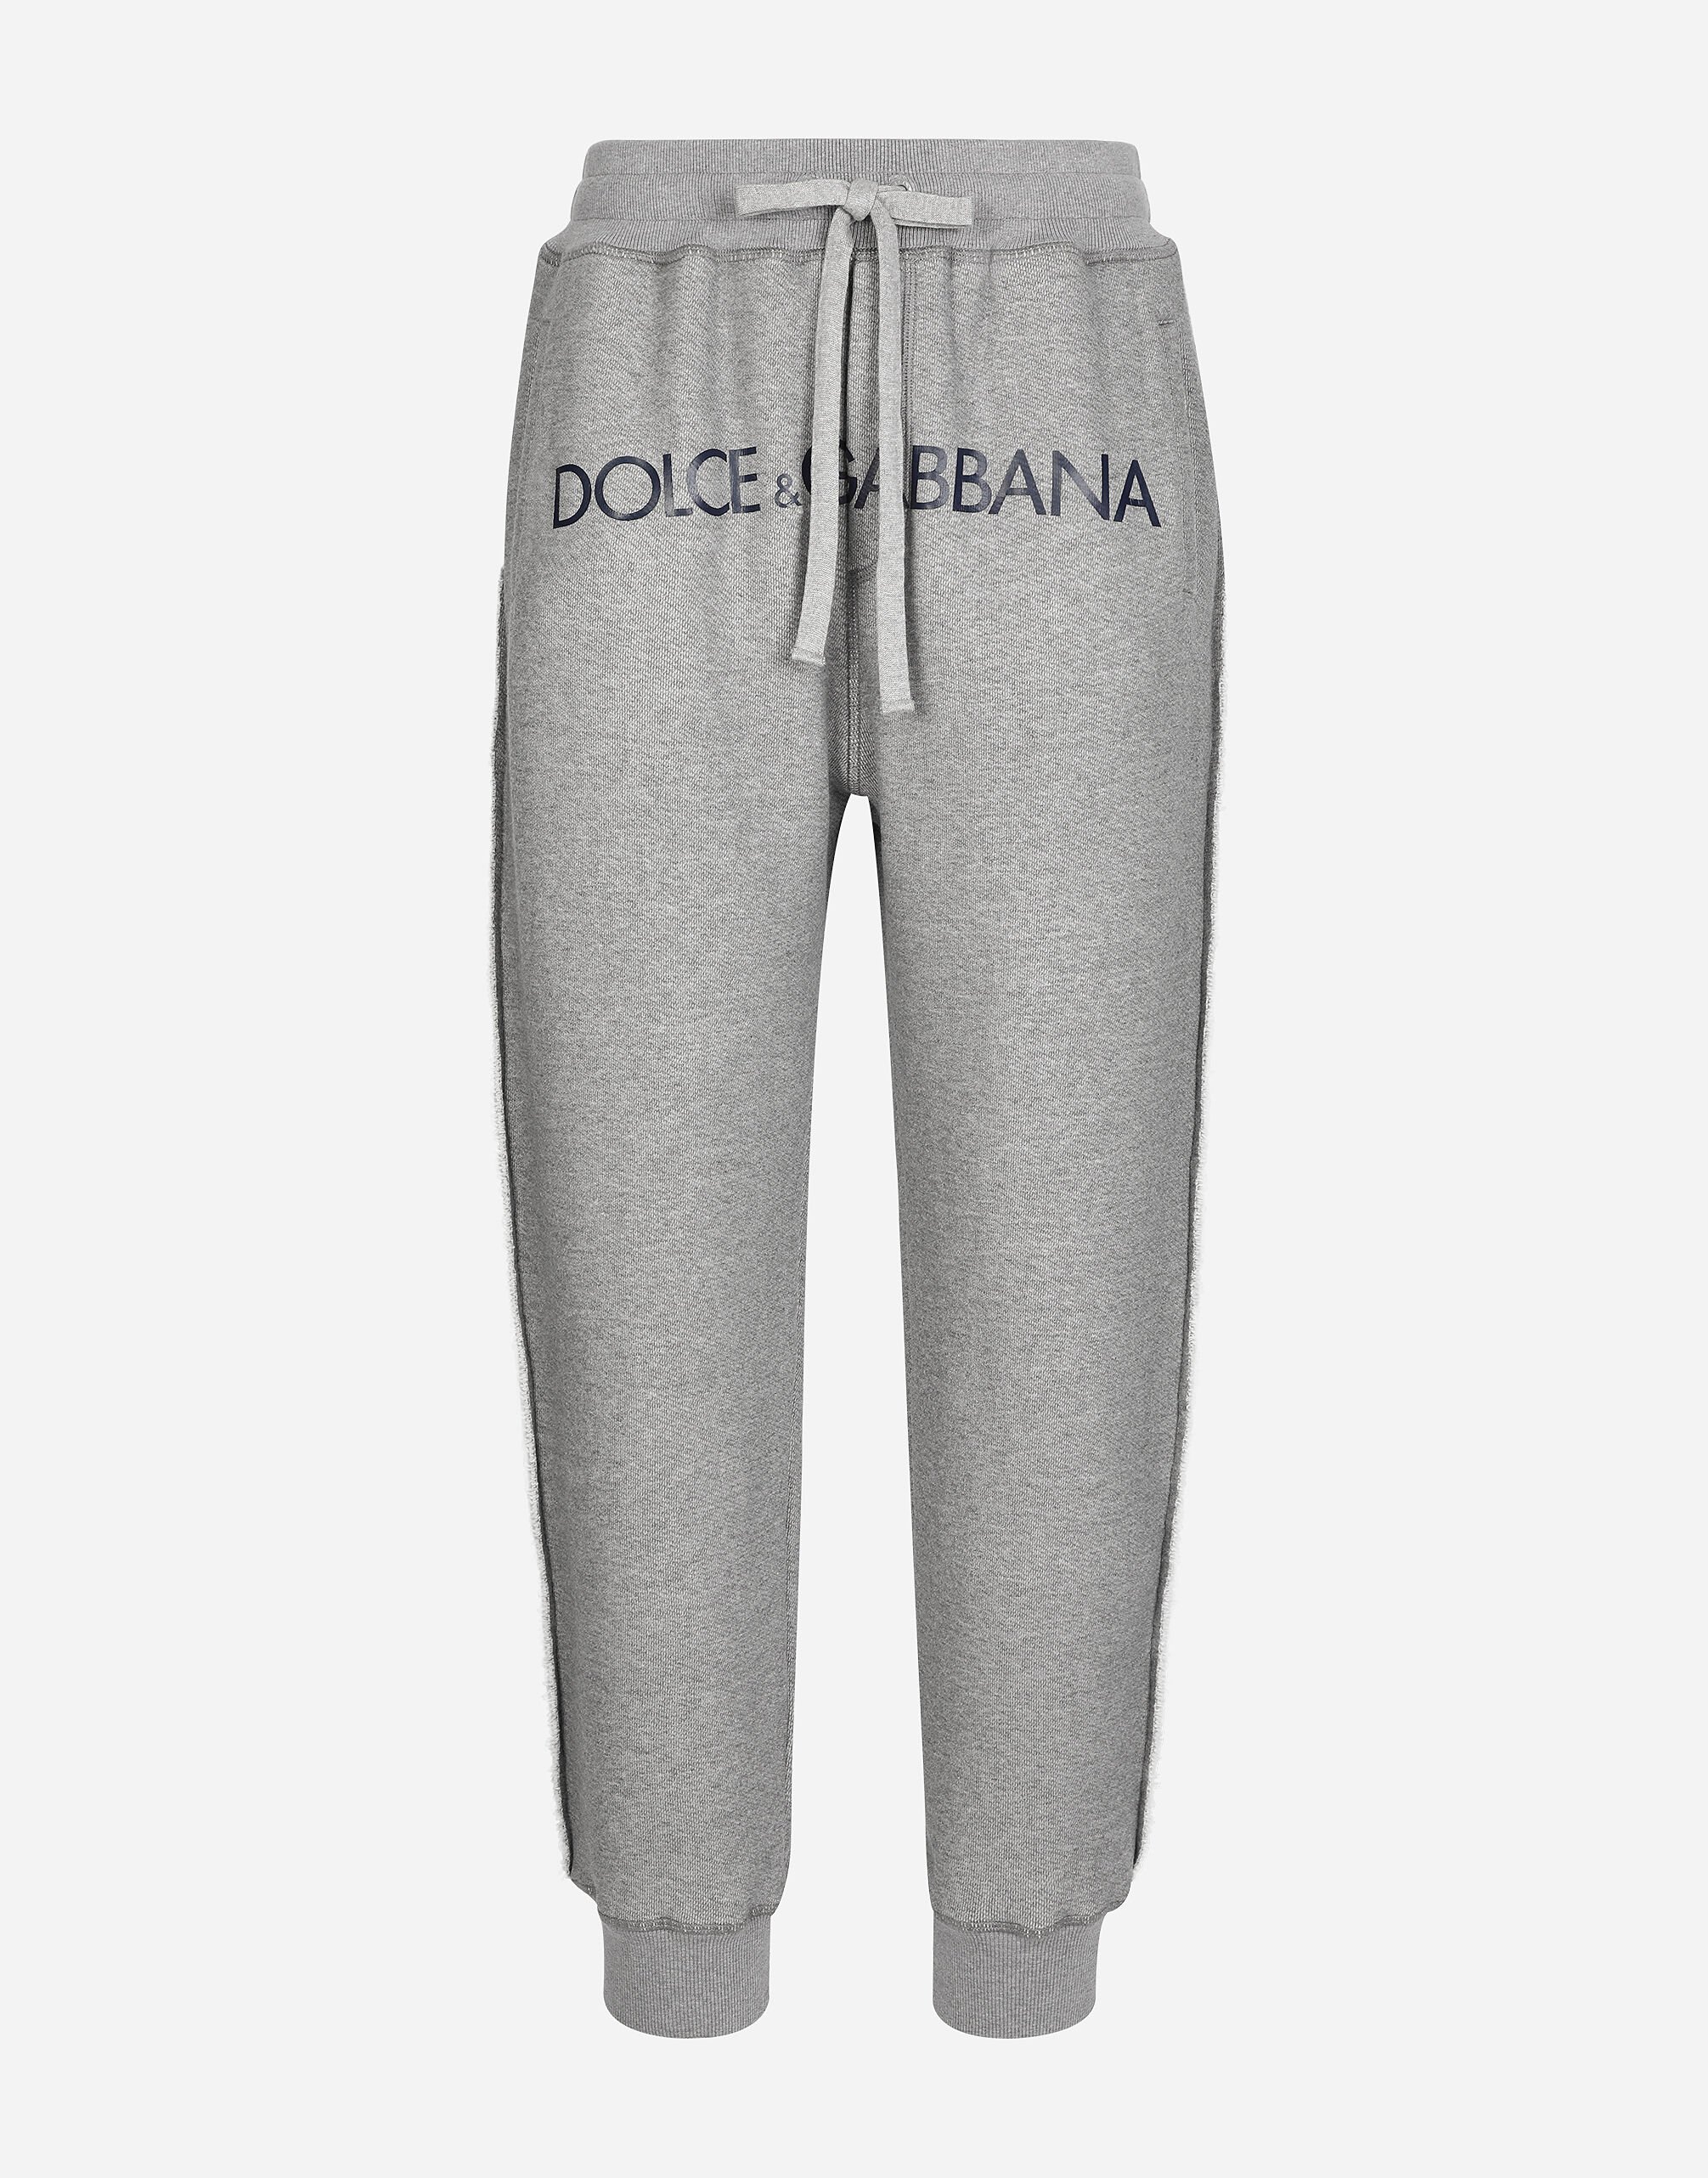 Dolce & Gabbana Jogging pants with Dolce&Gabbana logo Grey GP01PTFU4LB